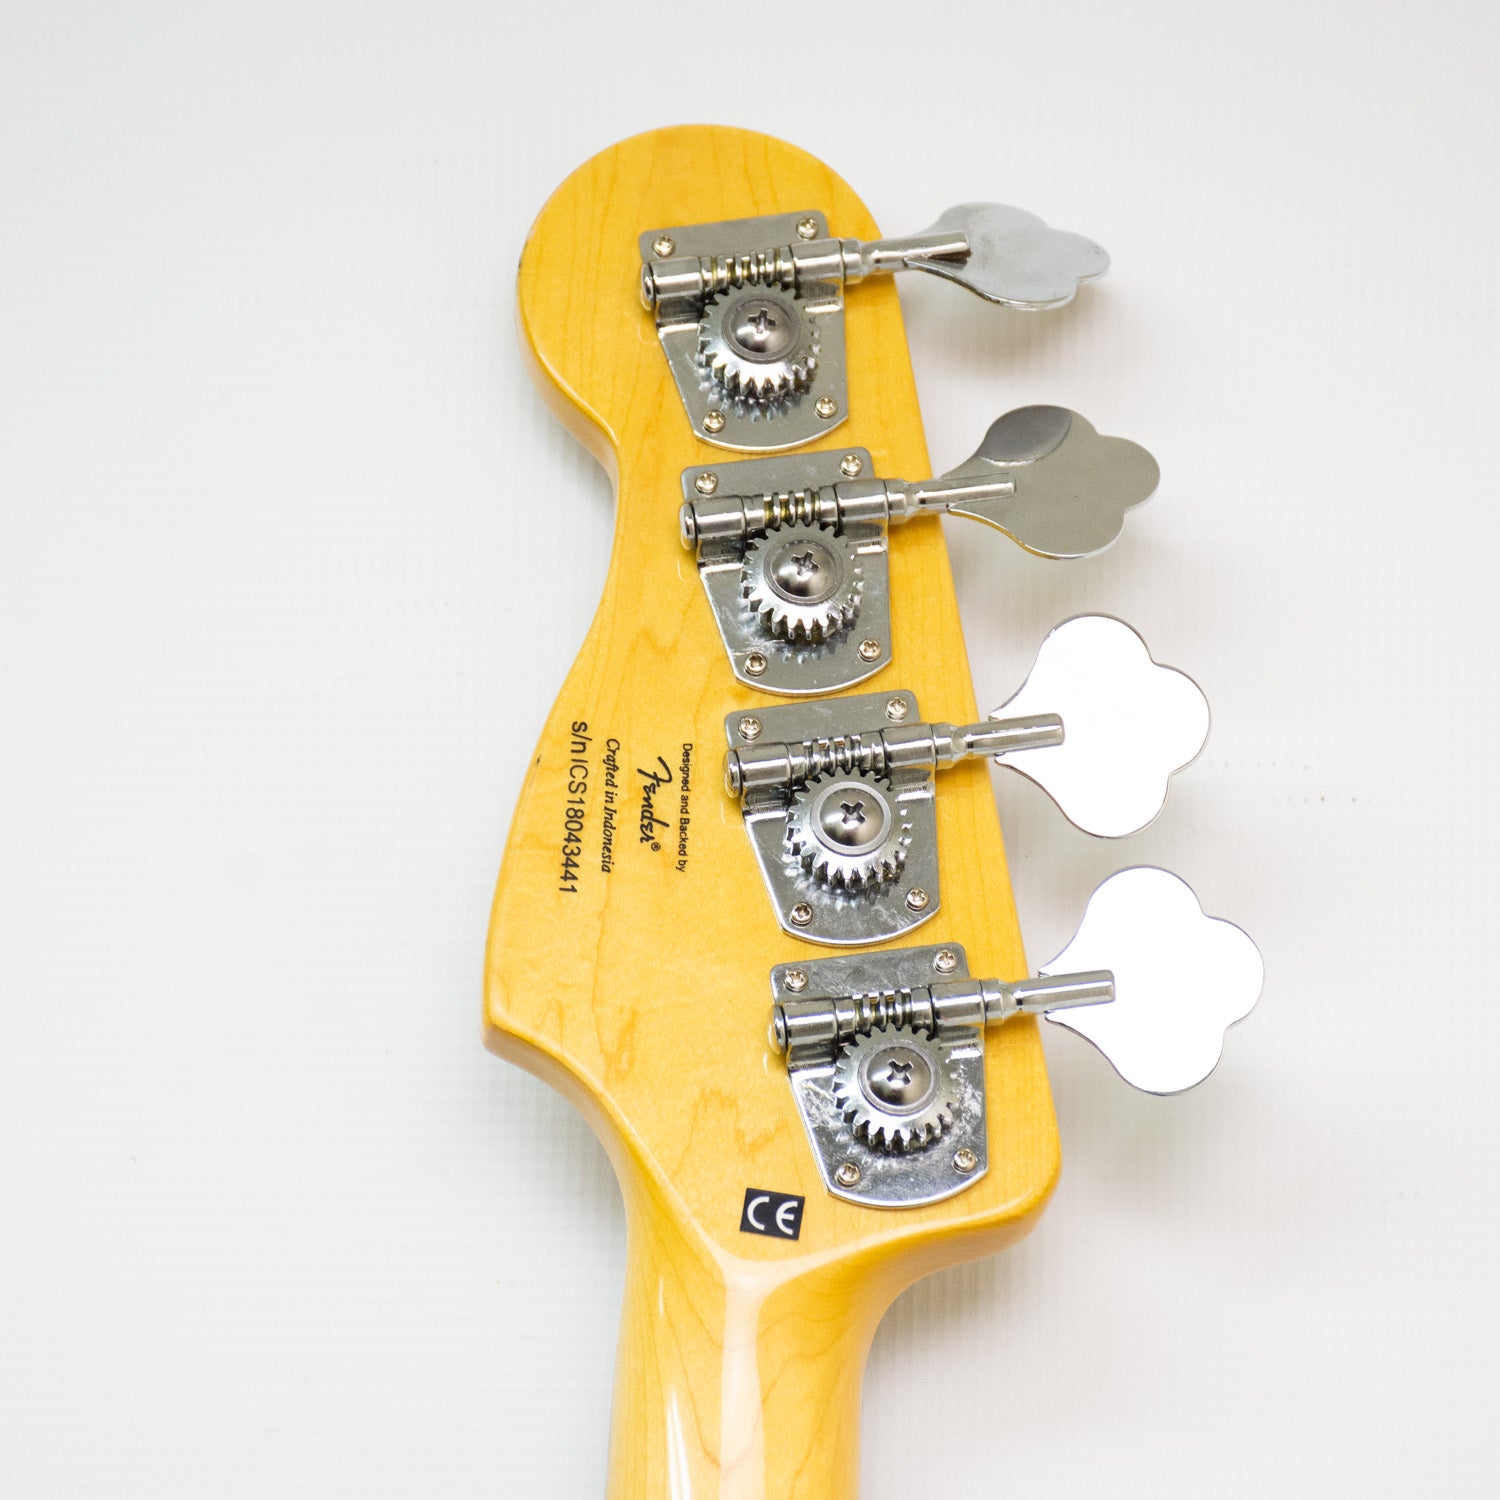 Squier Fender Precision Bass - MII